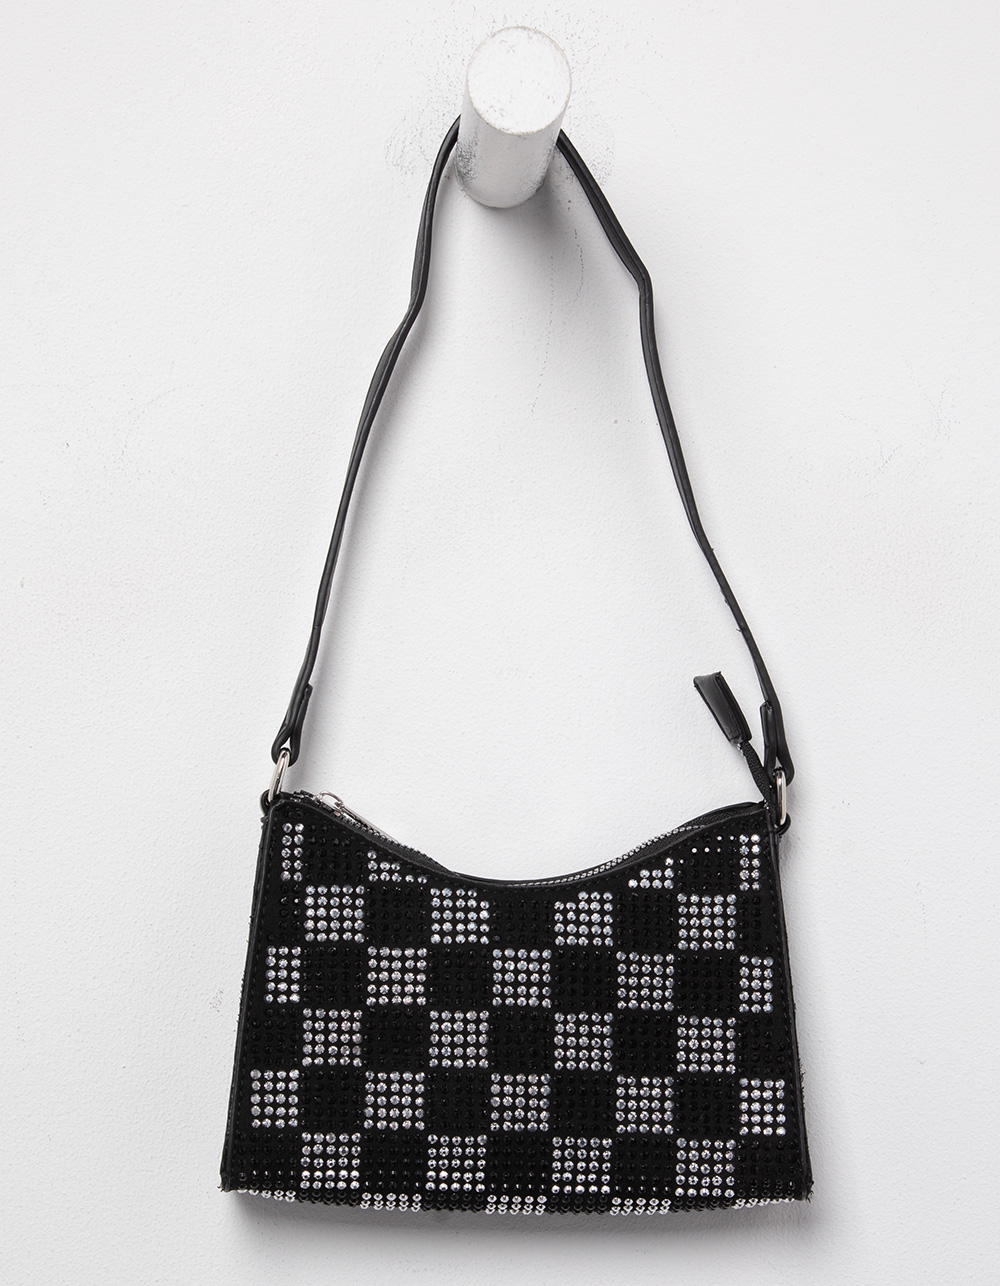 Rhinestone Checkered Shoulder Bag - Black/Silver - One Size